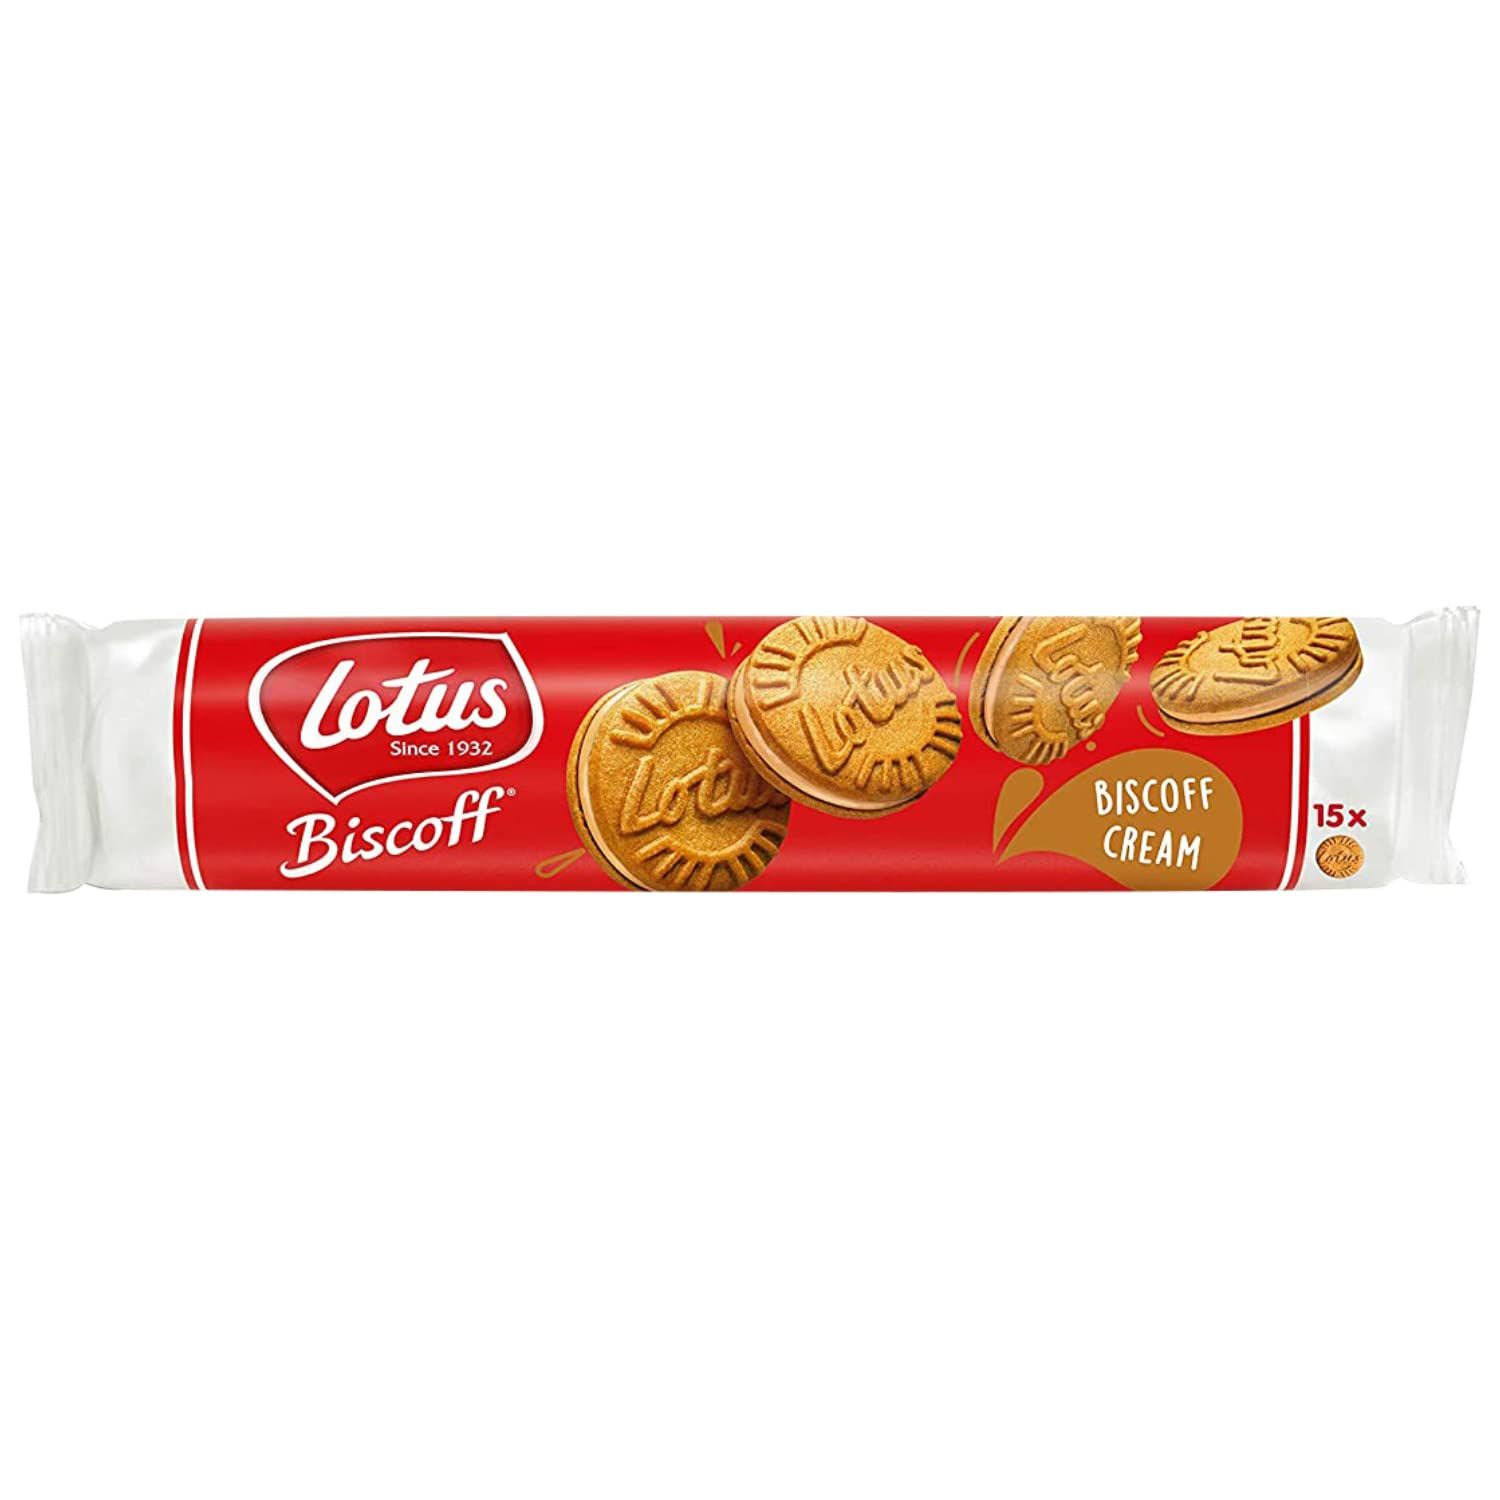 Lotus Biscoff Cream Biscuits Image